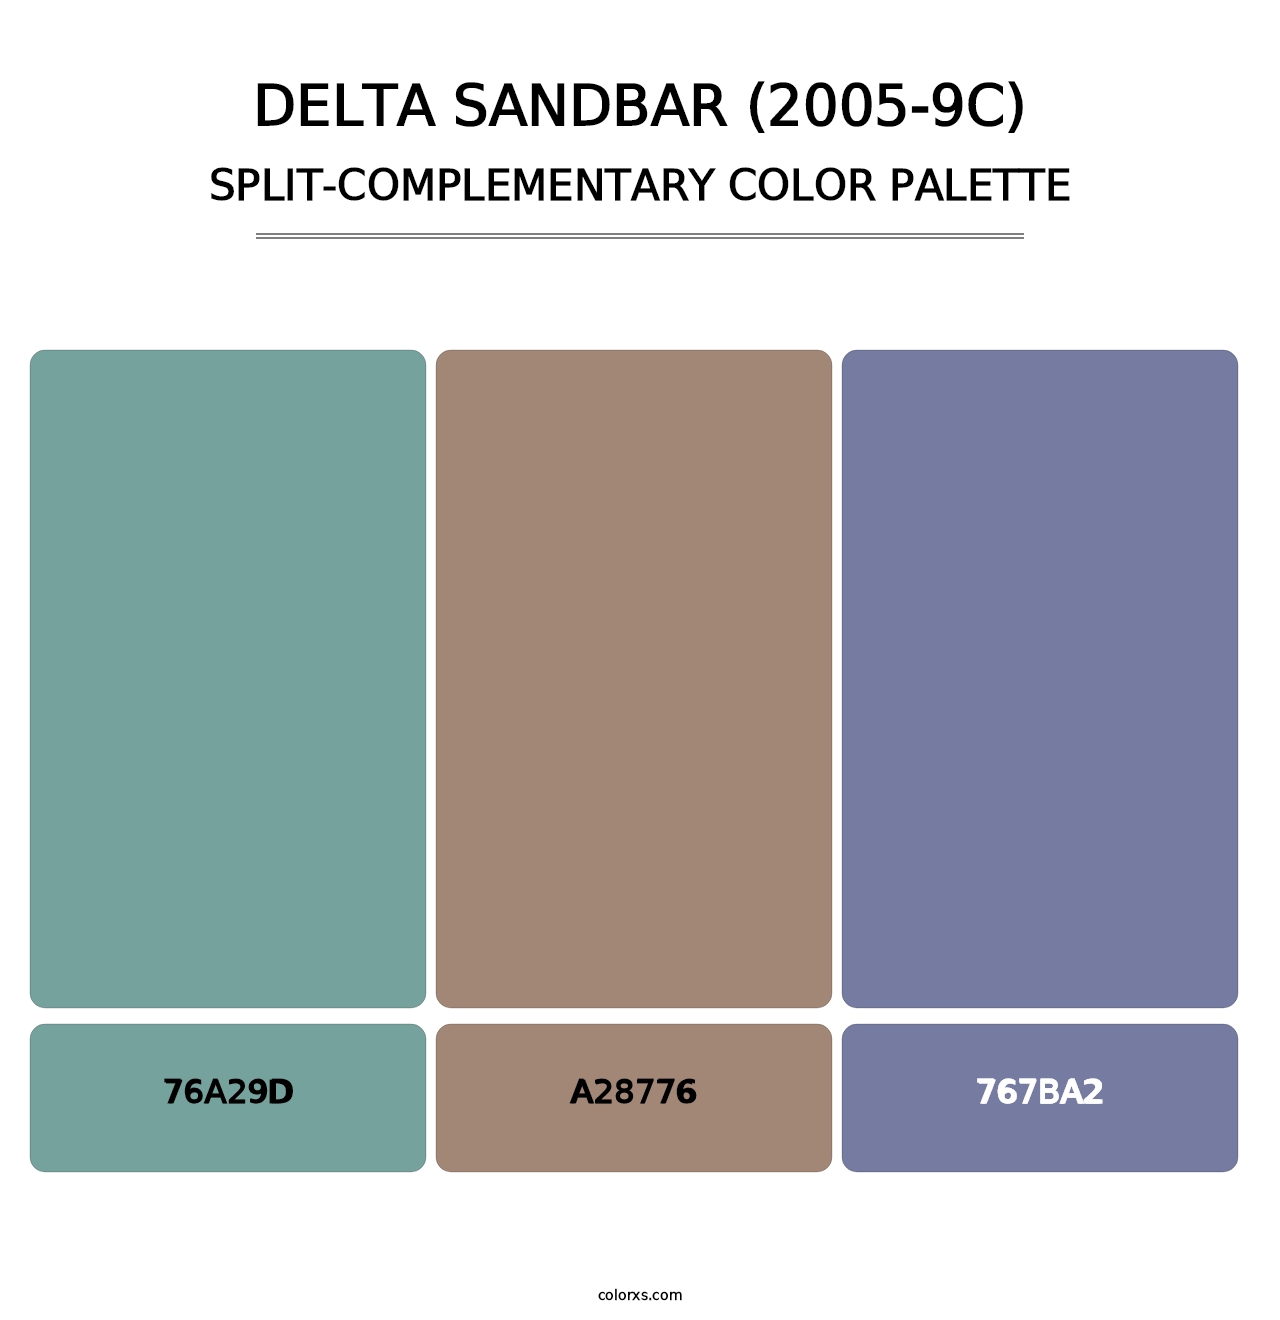 Delta Sandbar (2005-9C) - Split-Complementary Color Palette